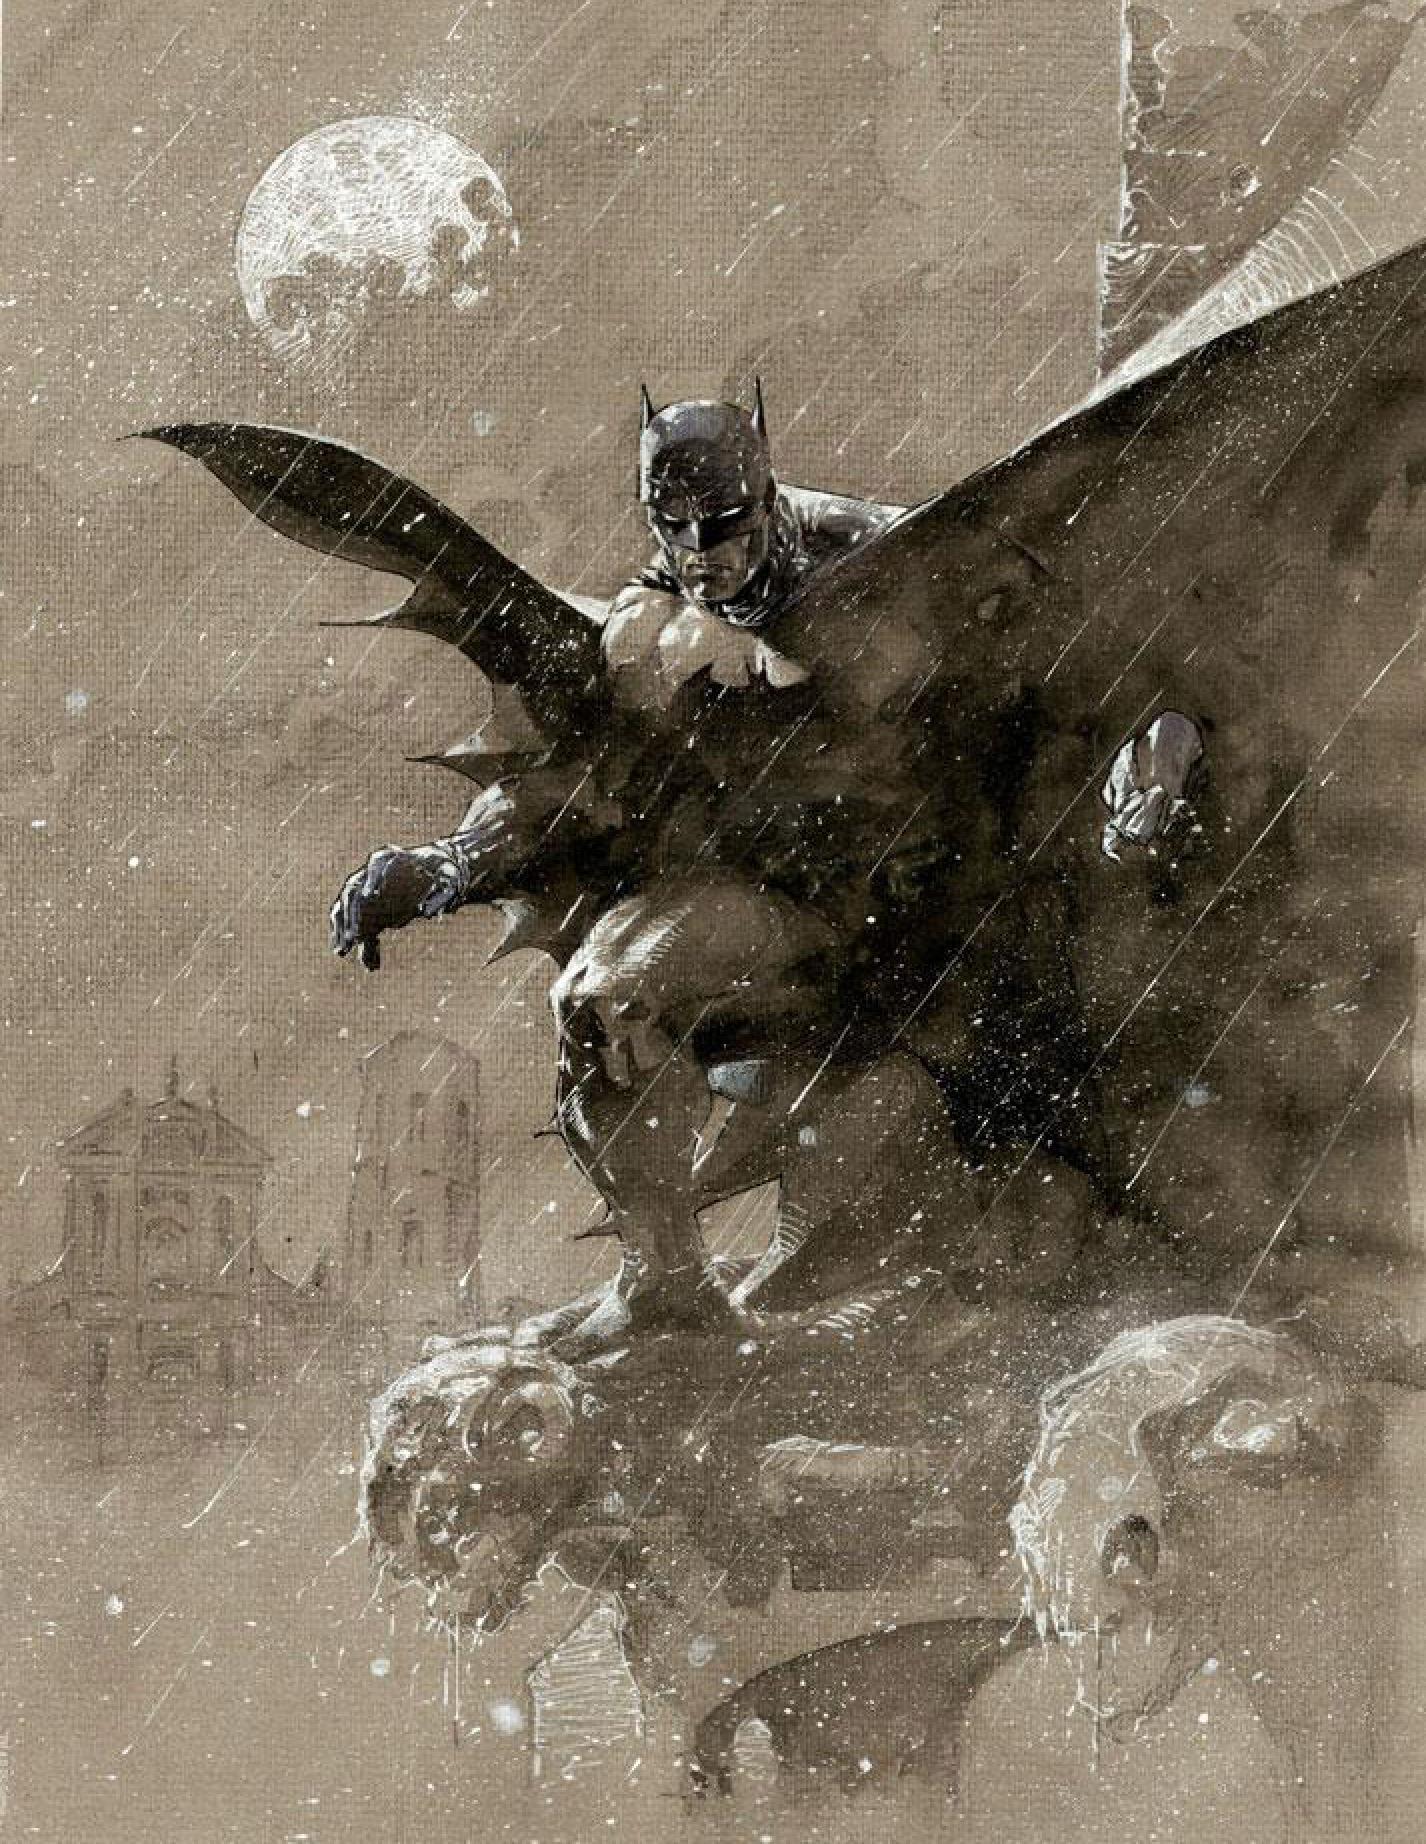 Batman Over San Prospero - Art by Jim Lee